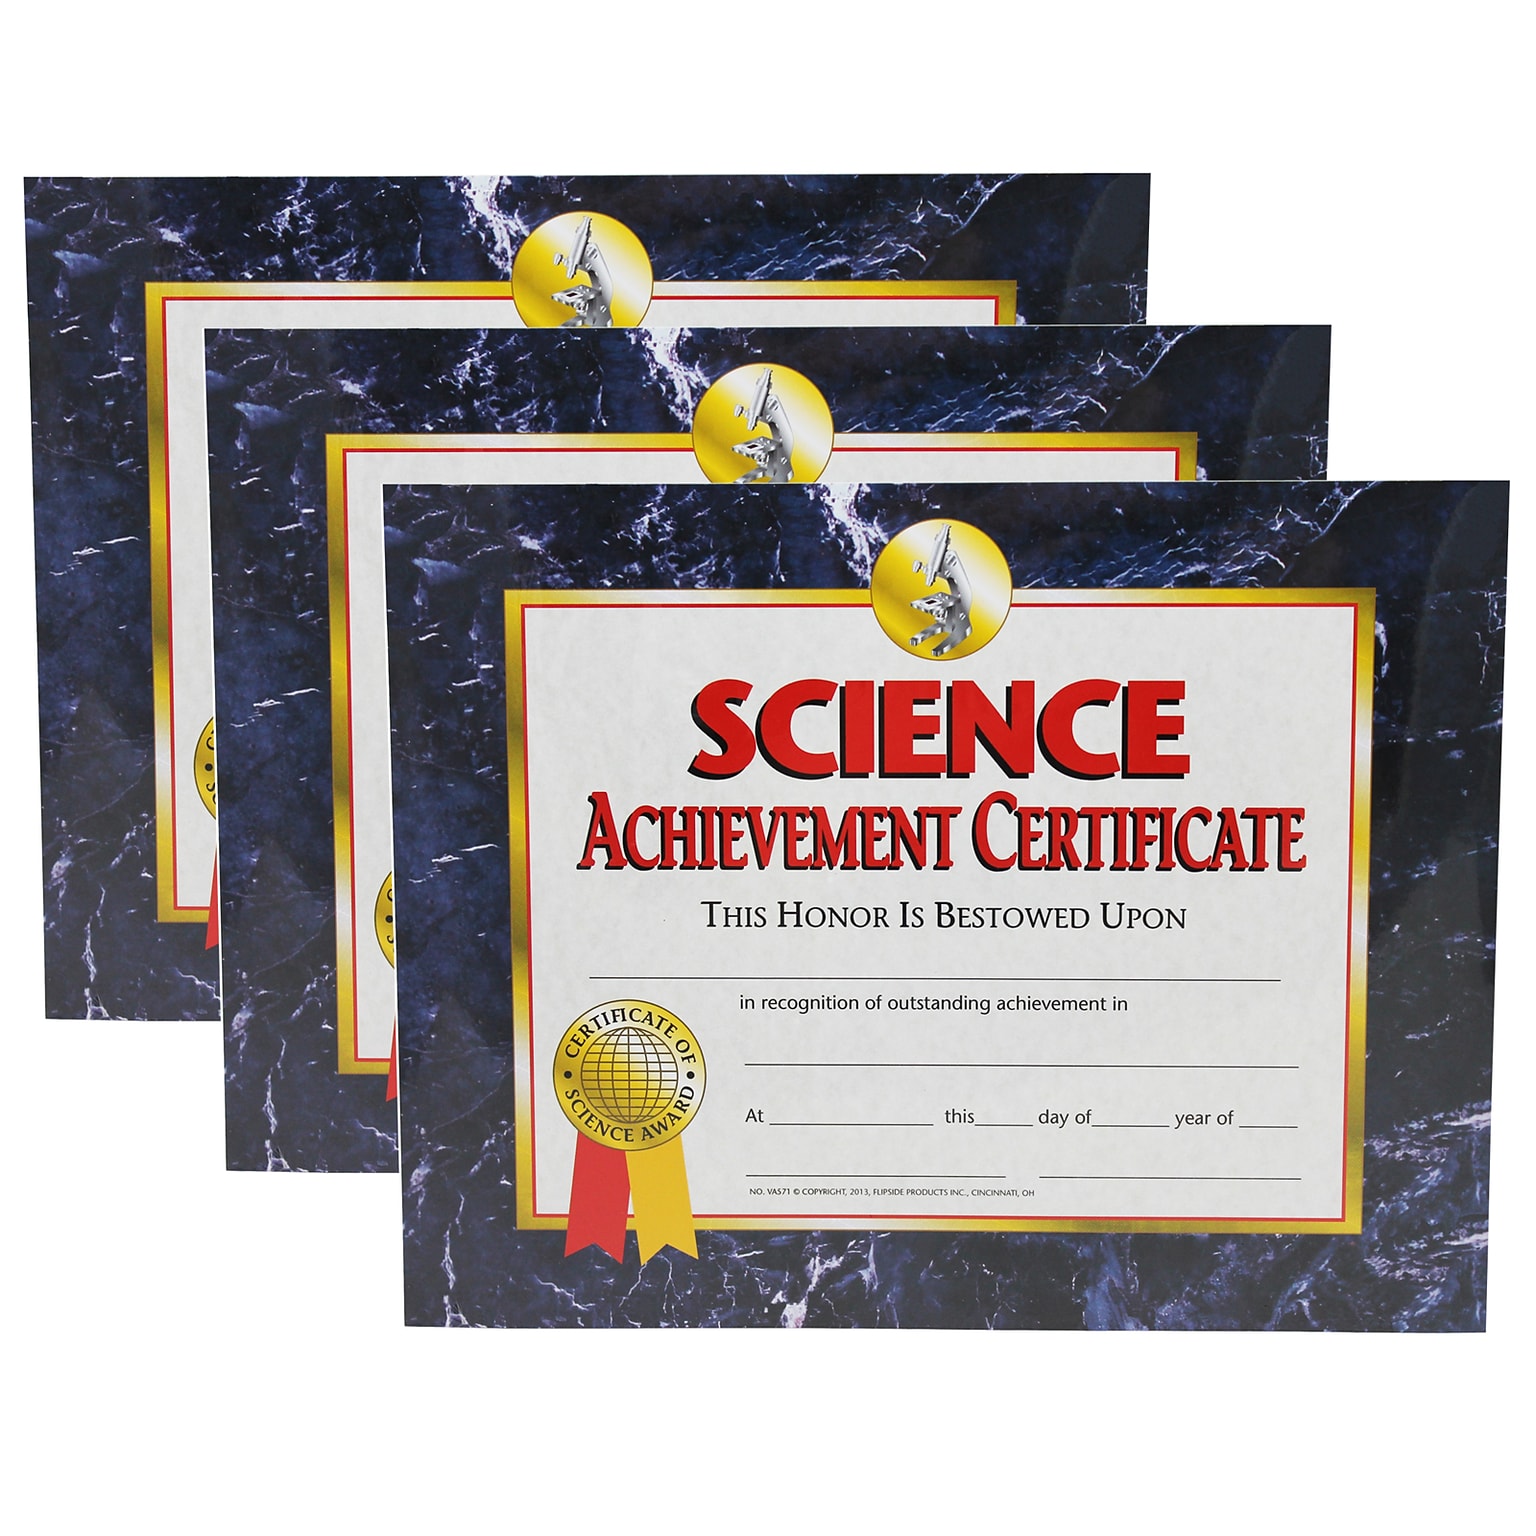 Hayes Publishing Science Achievement Certificate, 30 Per Pack, 3 Packs (H-VA571-3)